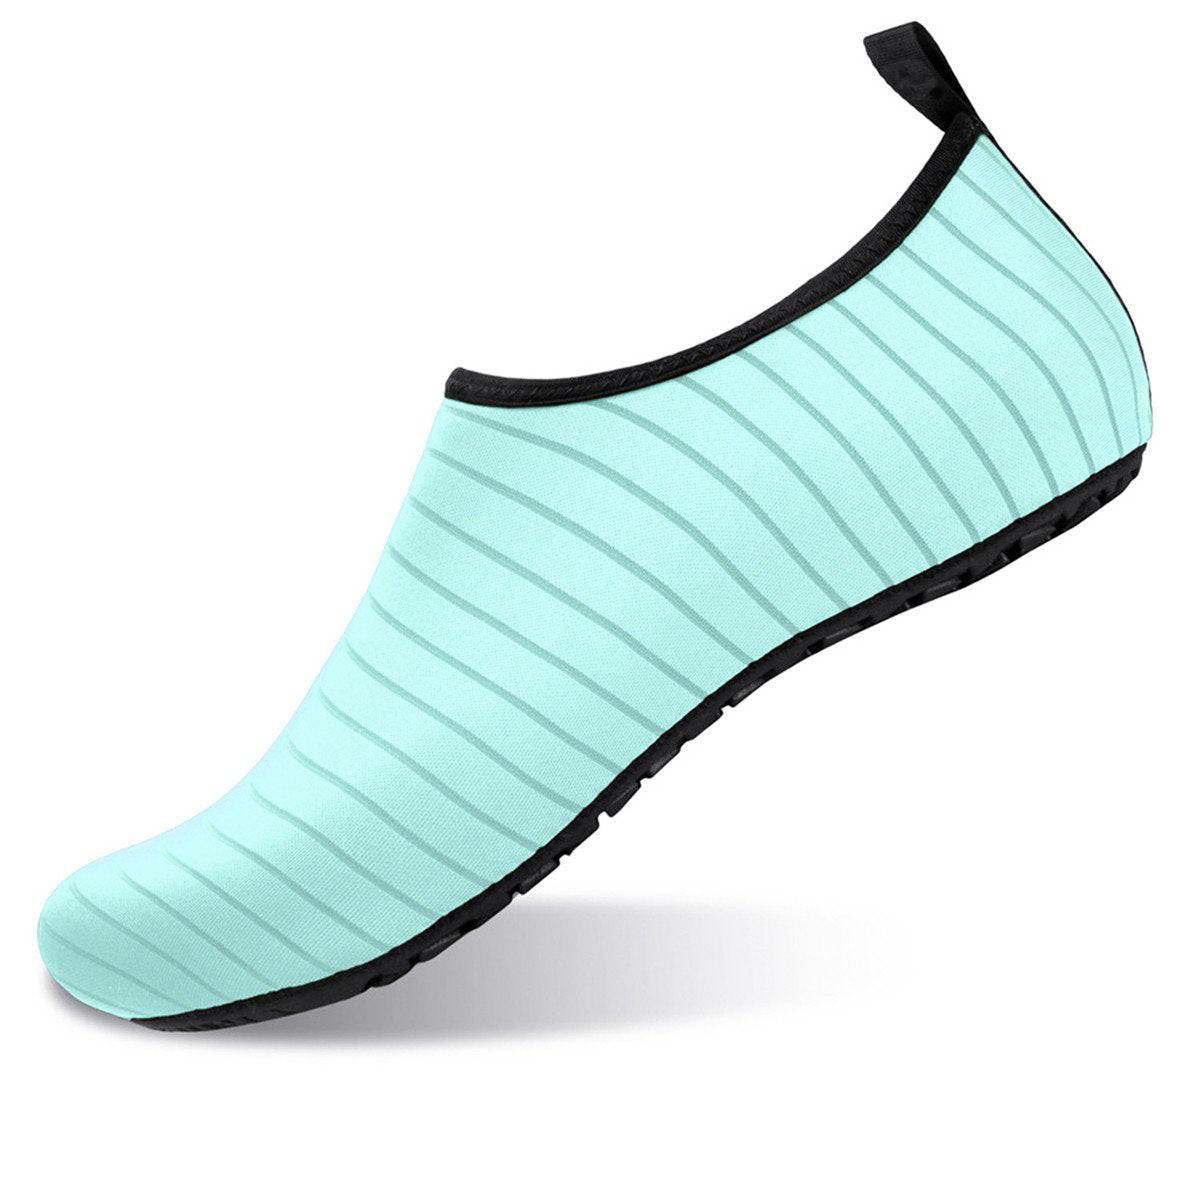 Women’s swimwear - Summer Barefoot Shoes Quick Dry Aqua Socks for Beach Swim Yoga Exercise Aqua Shoes